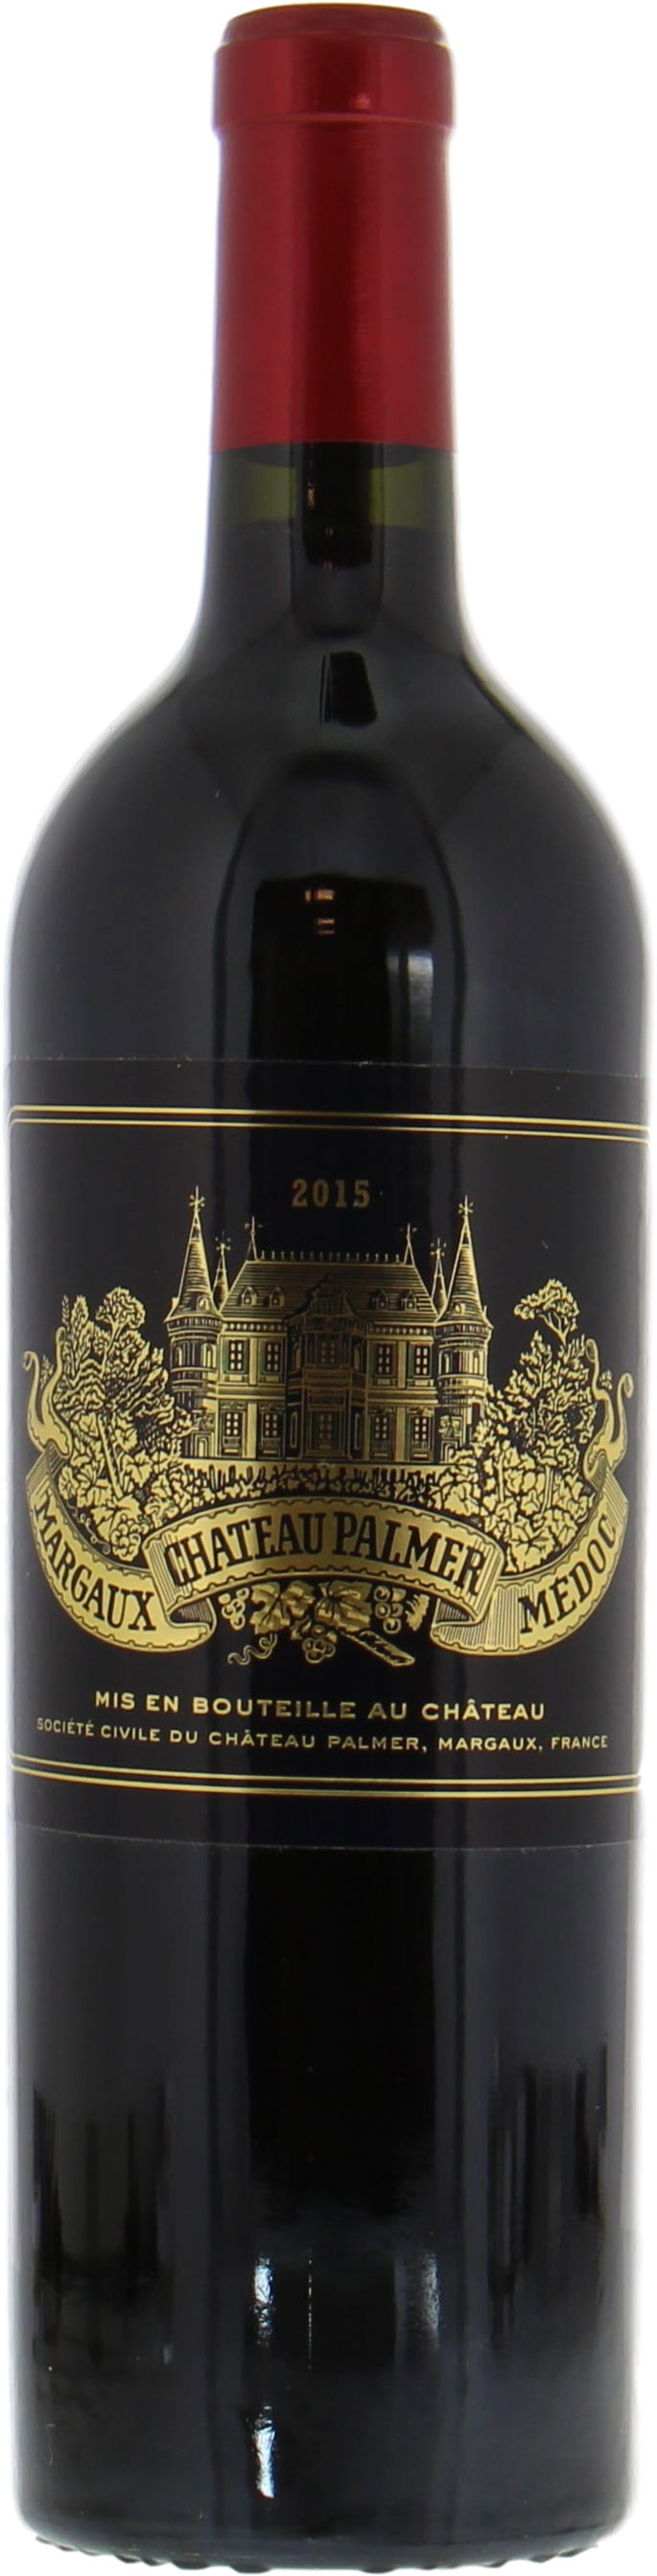 Chateau Palmer - Chateau Palmer 2015 Perfect